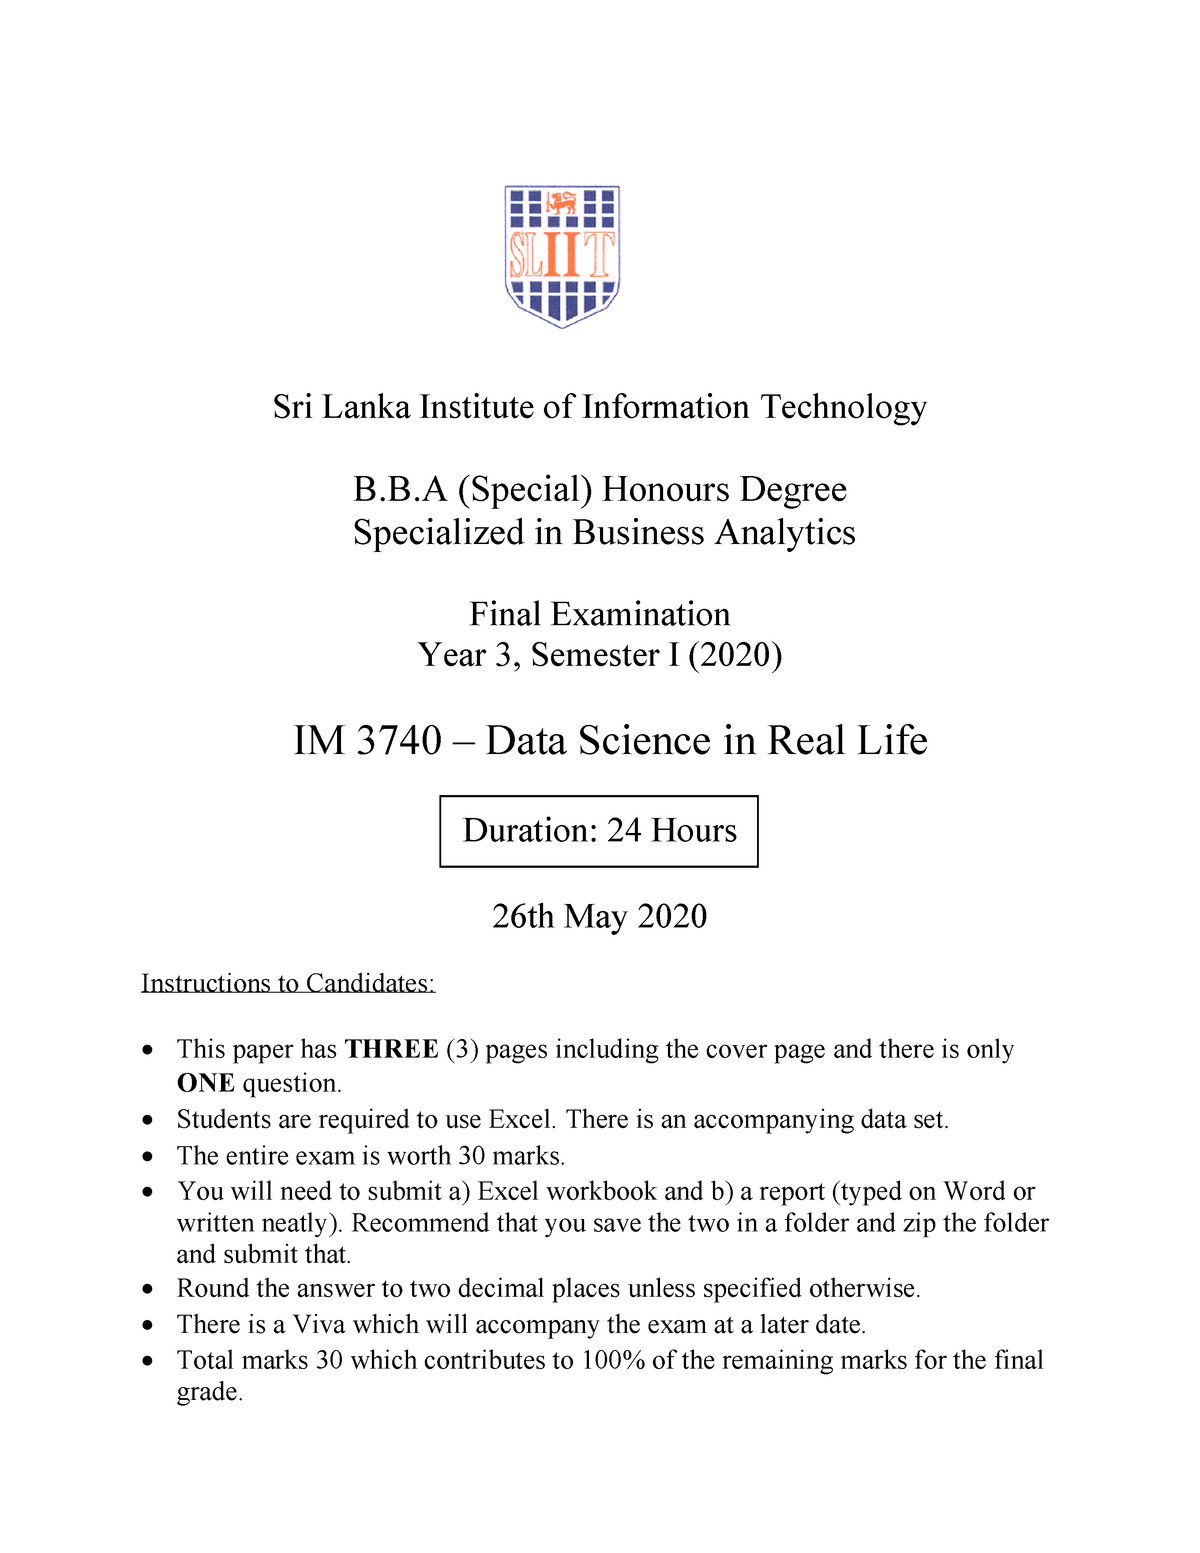 final-exam-2020-sri-lanka-institute-of-information-technology-b-b-special-honours-degree